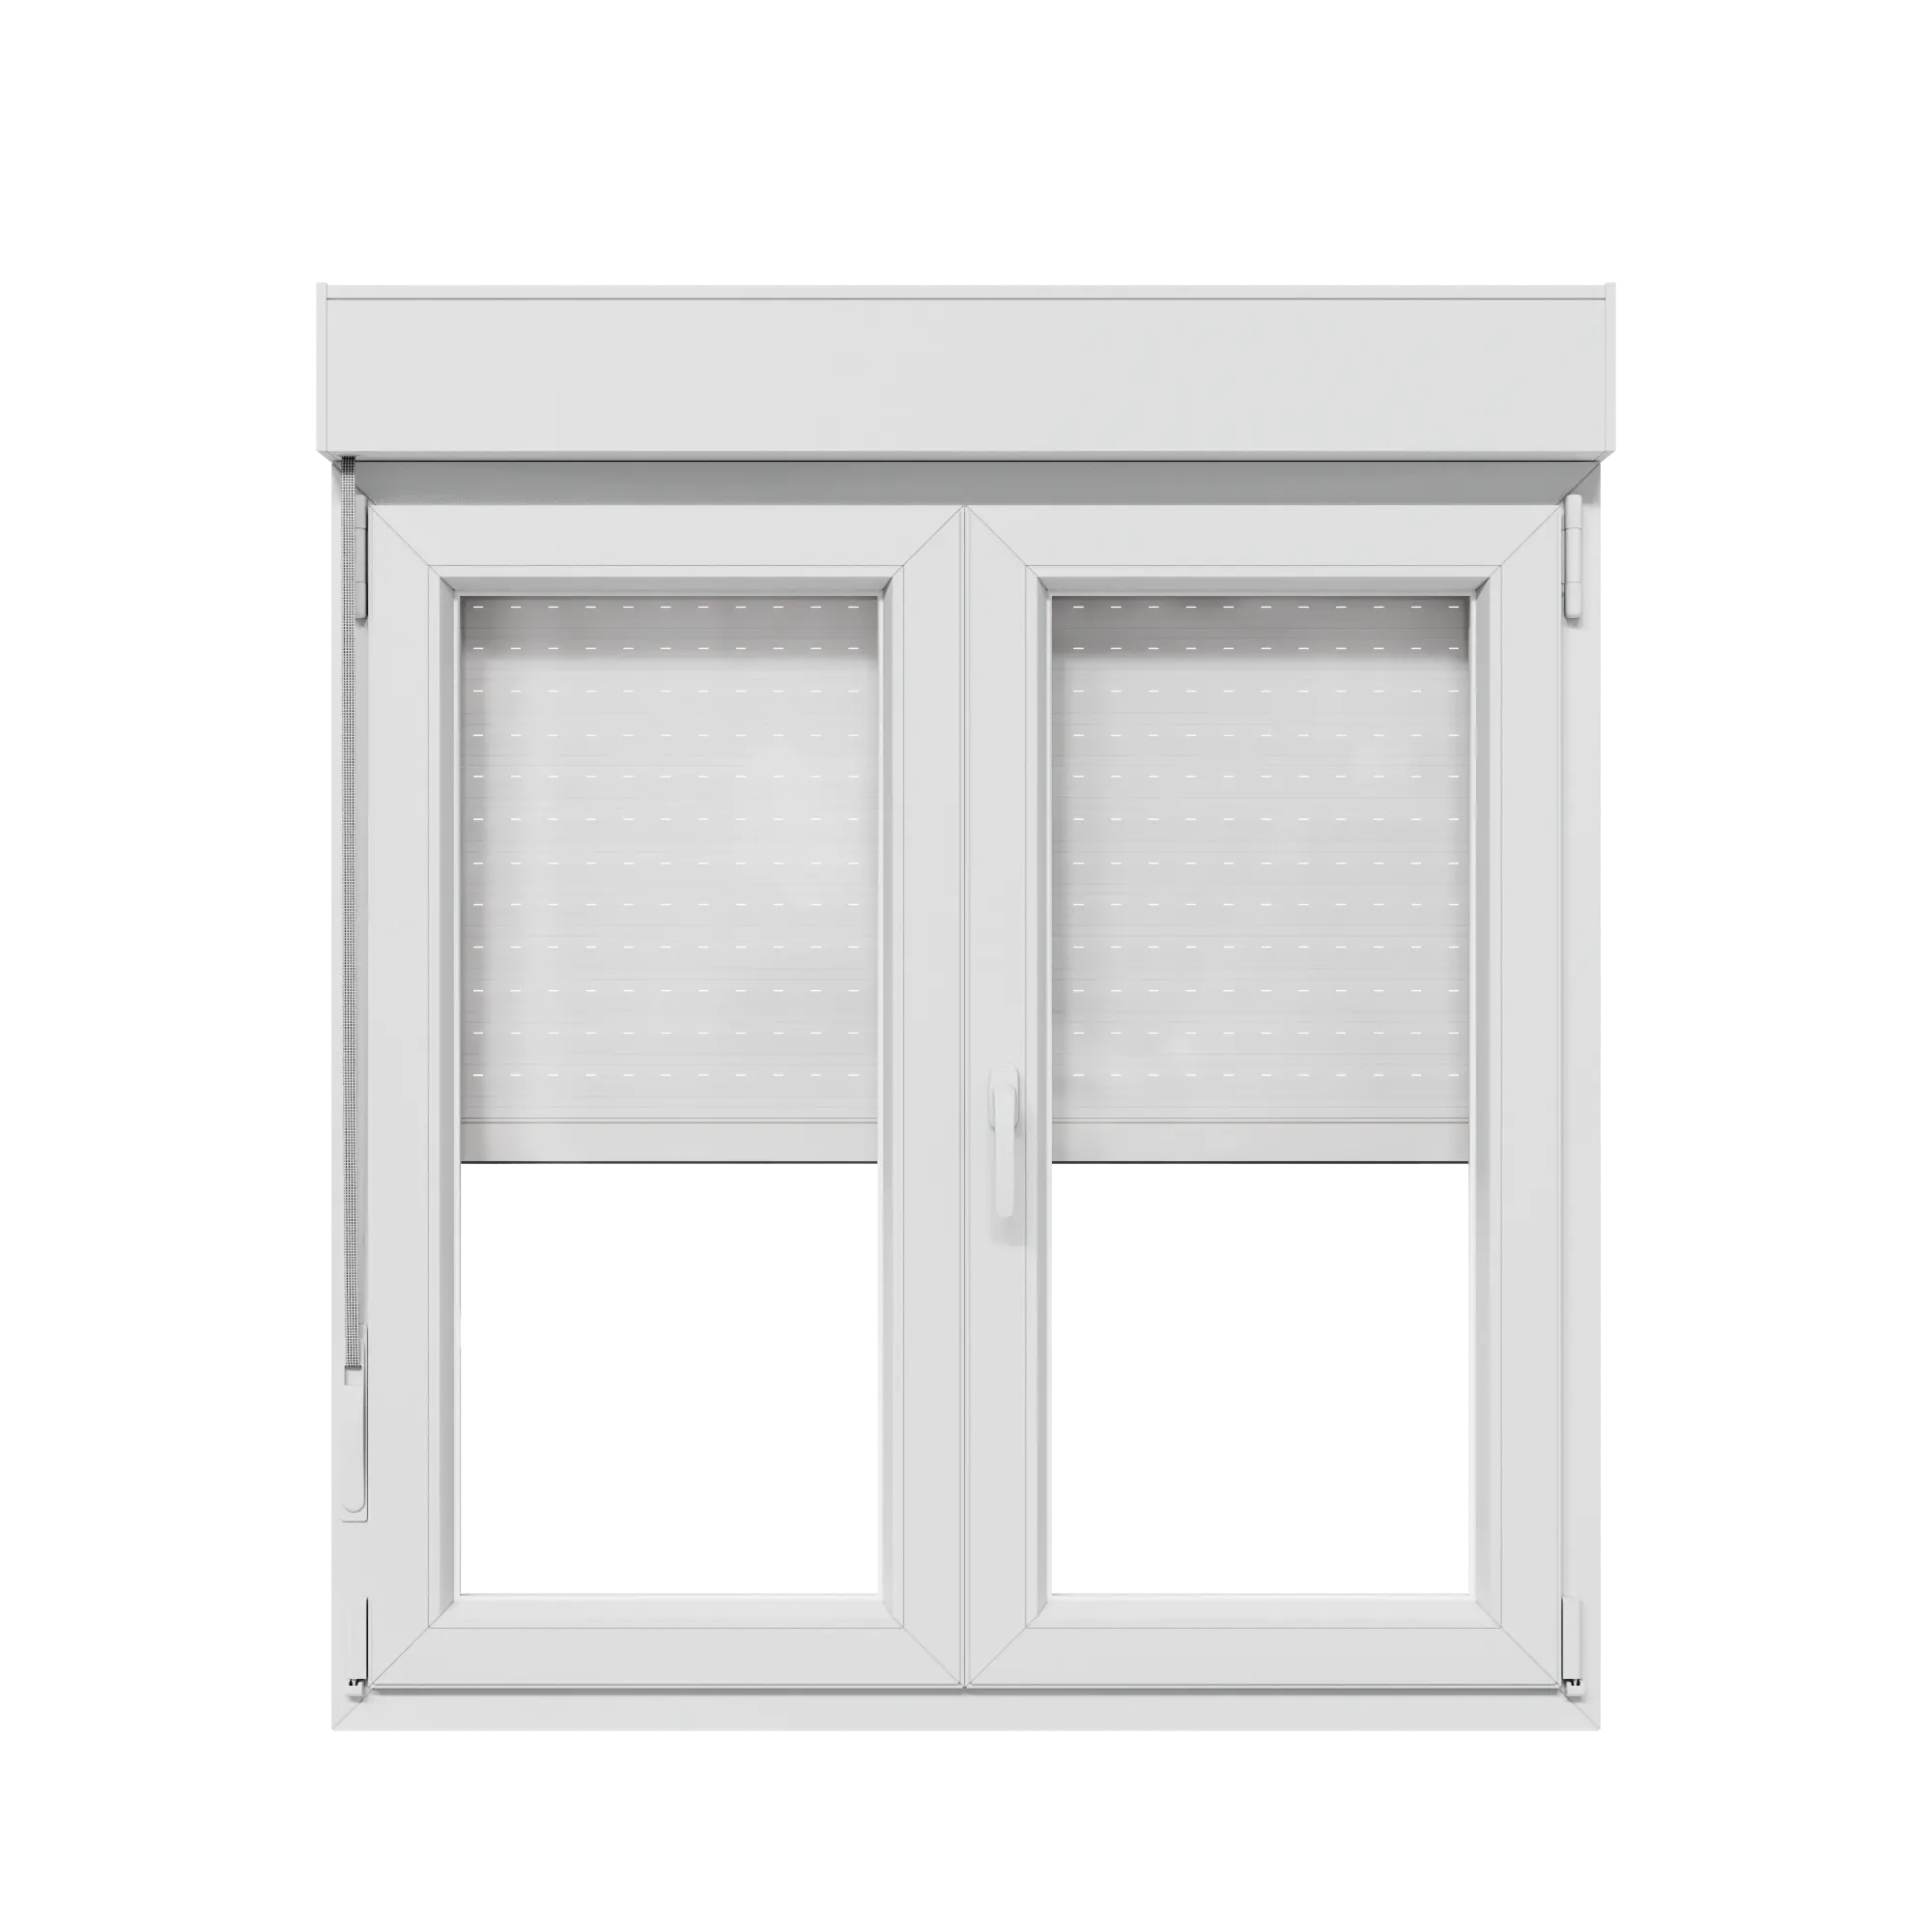 Kit de aislamiento de ventana, kit de aislamiento de ventana para invierno,  se puede cortar y ajustar, película aislante de calor transparente